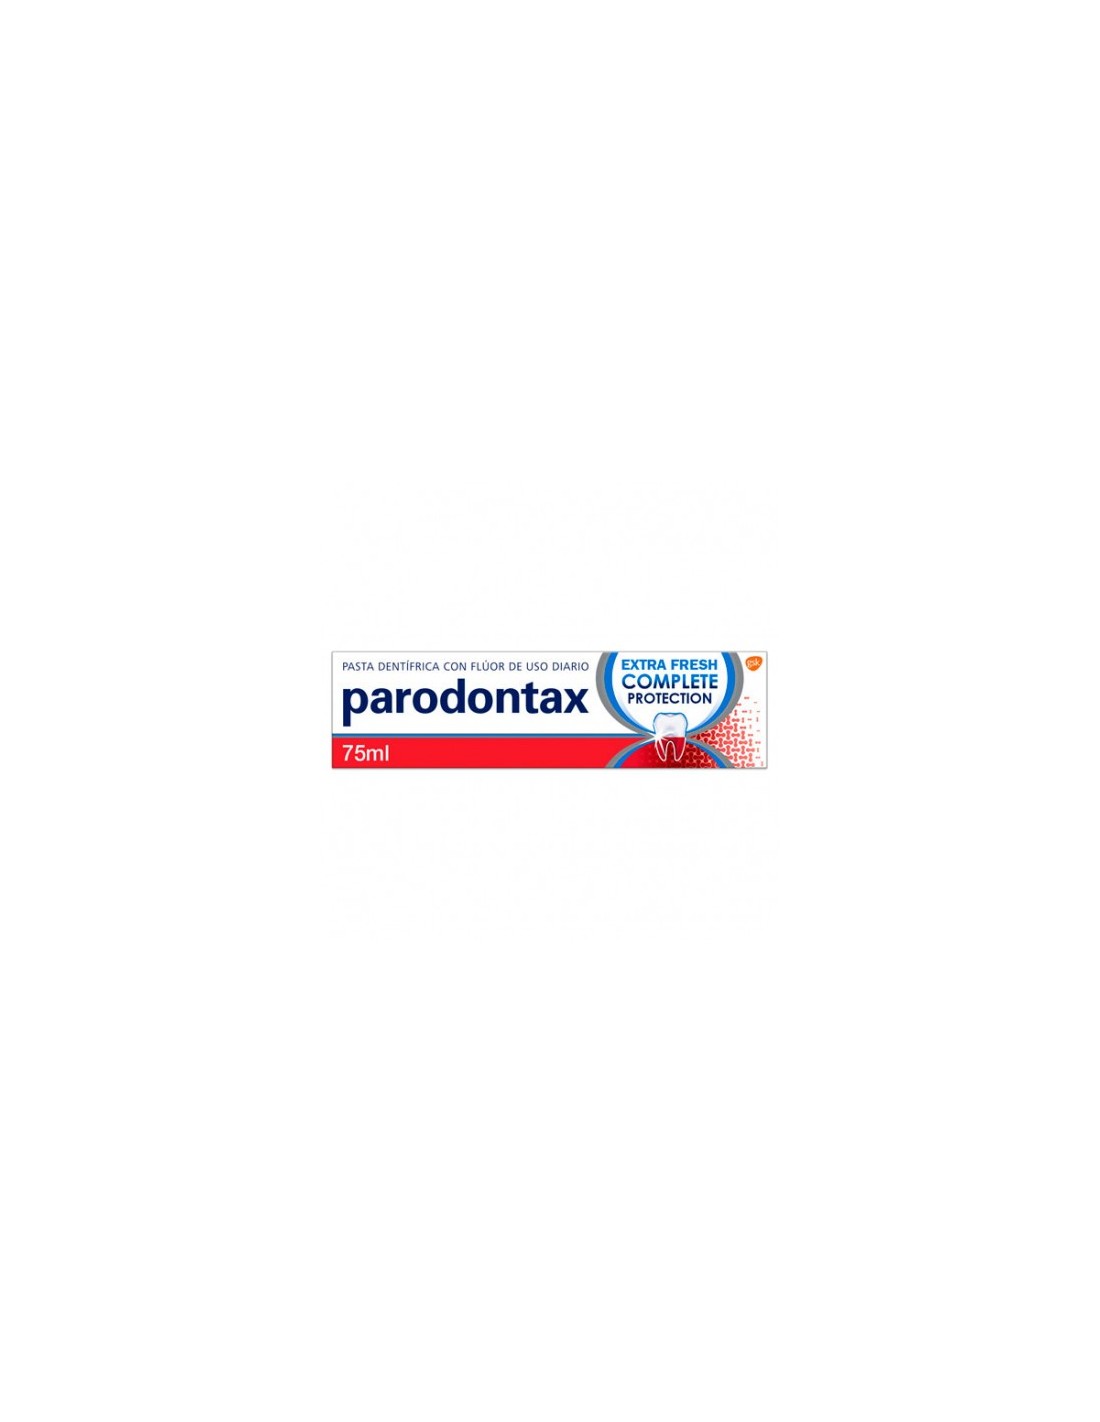 Parodontax Complete Protection Extra Fresh 75ml